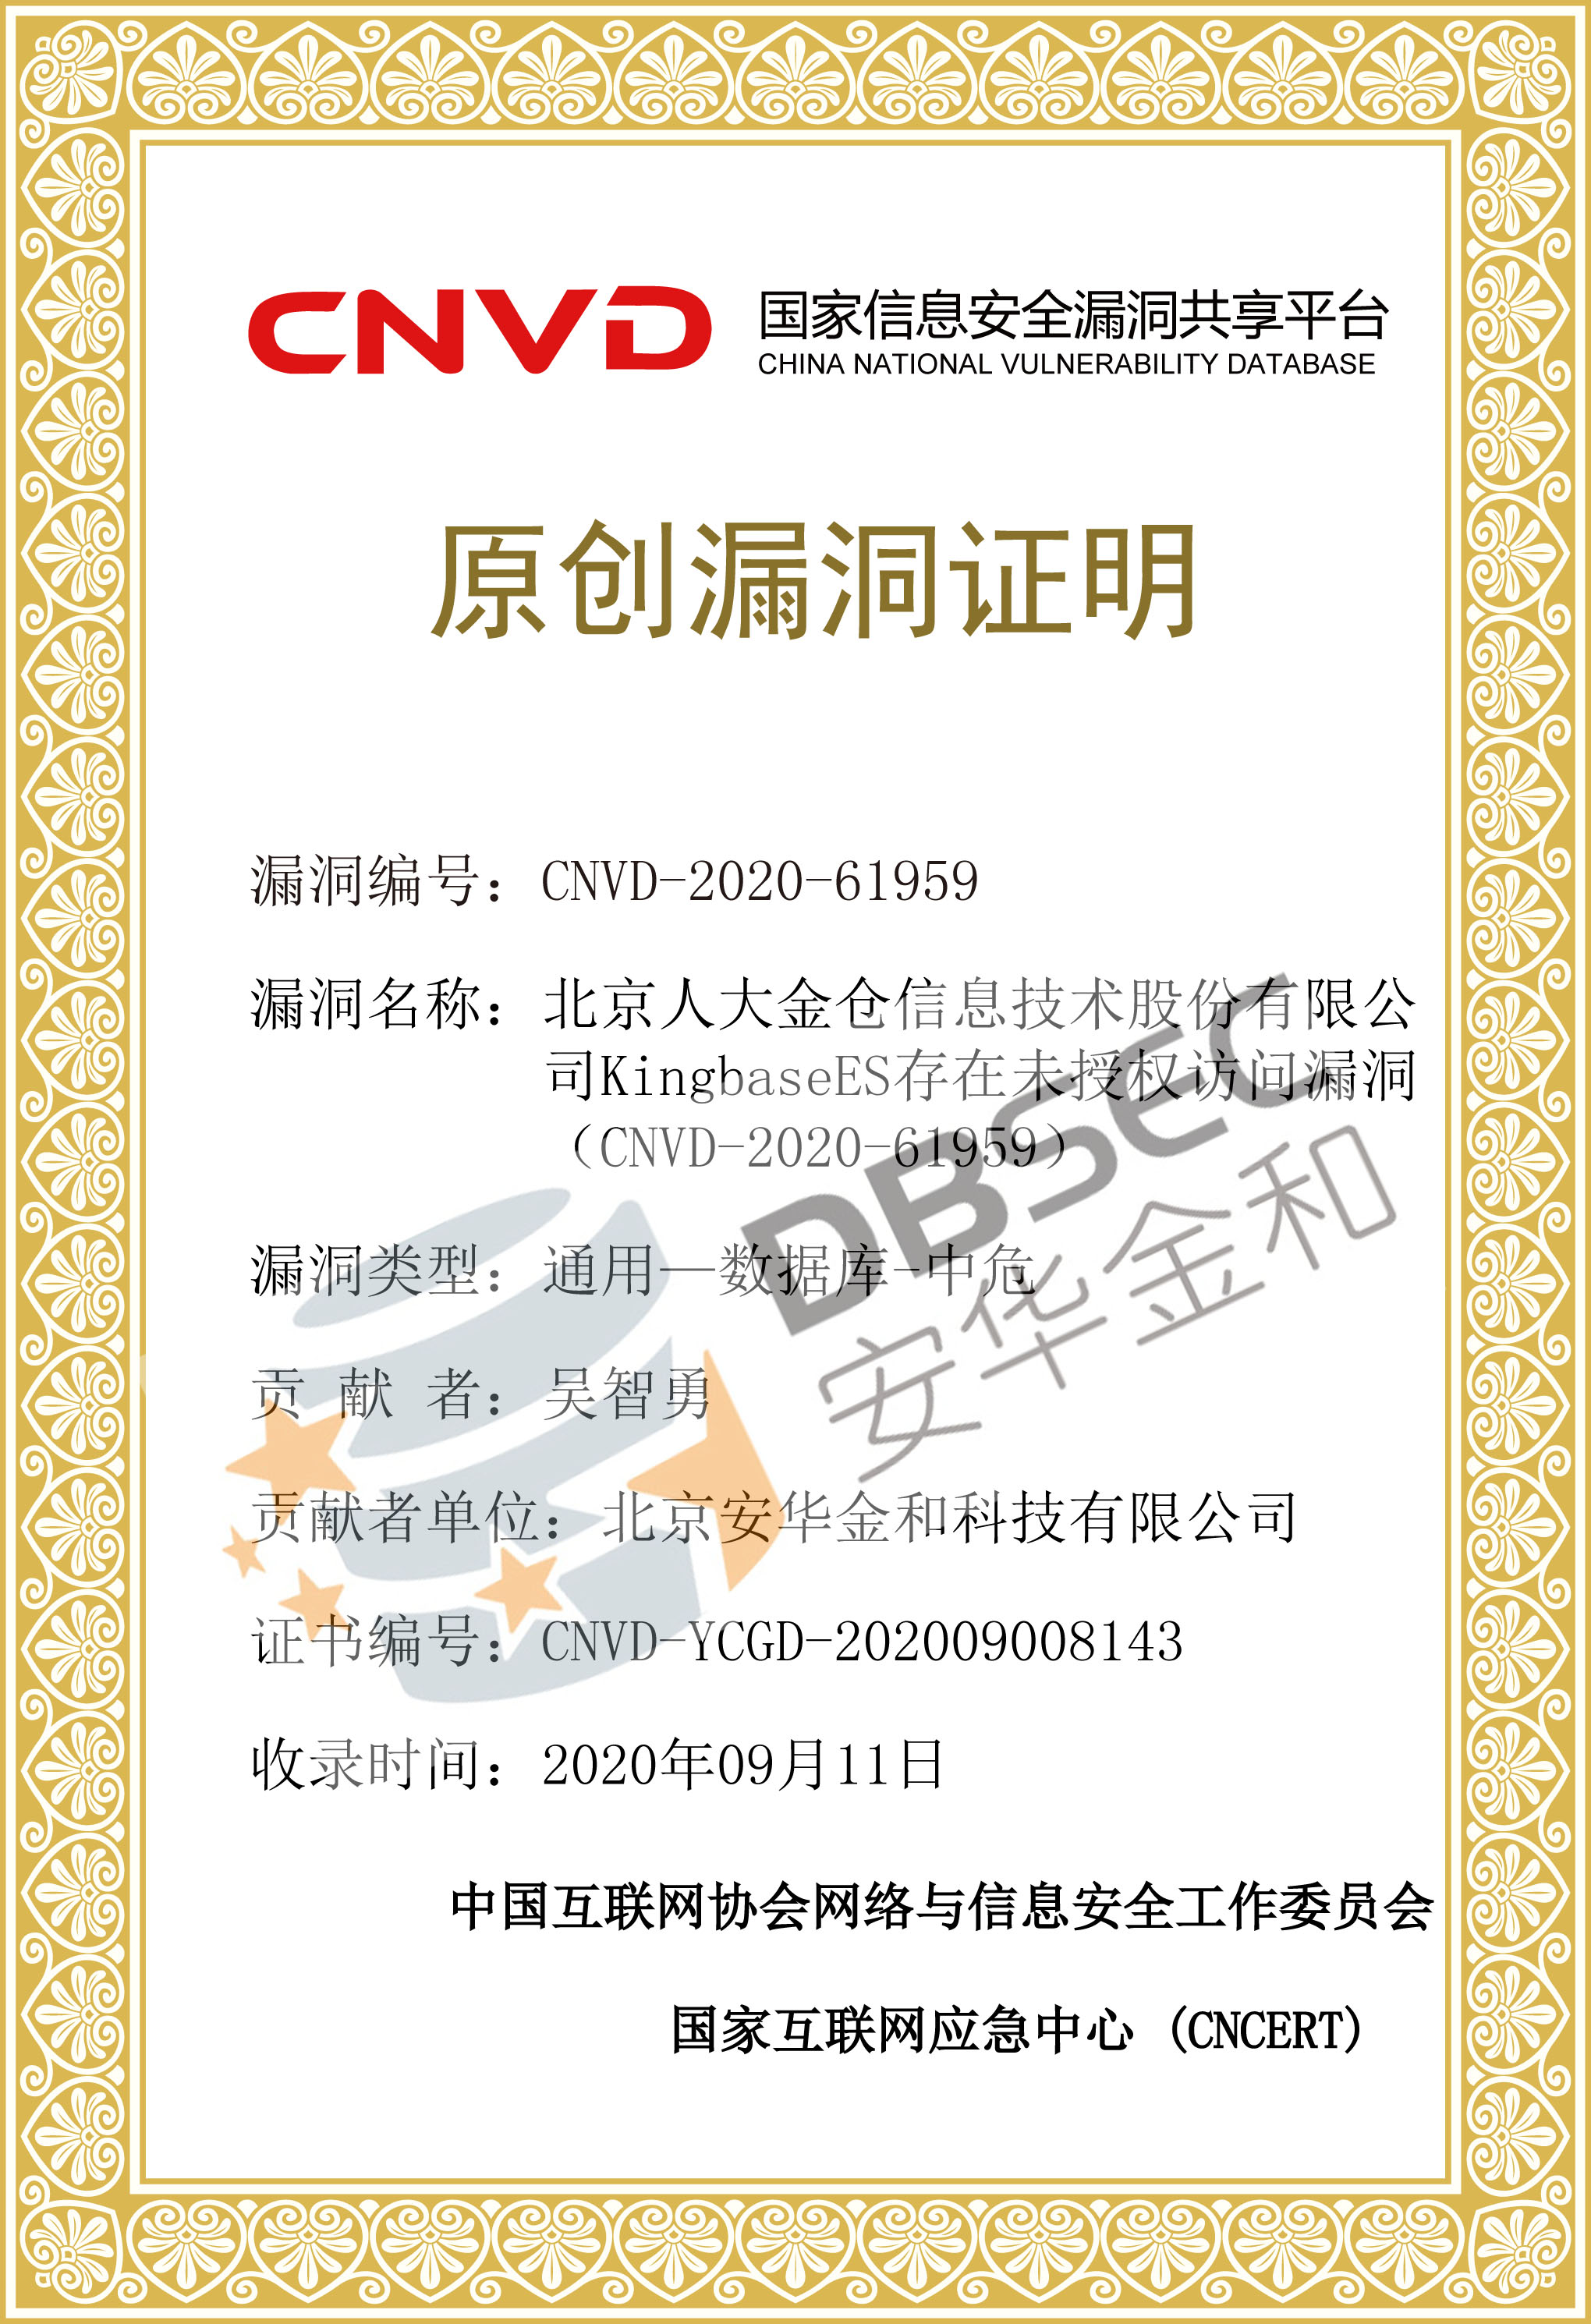 CNVD-YCGD-202009008143